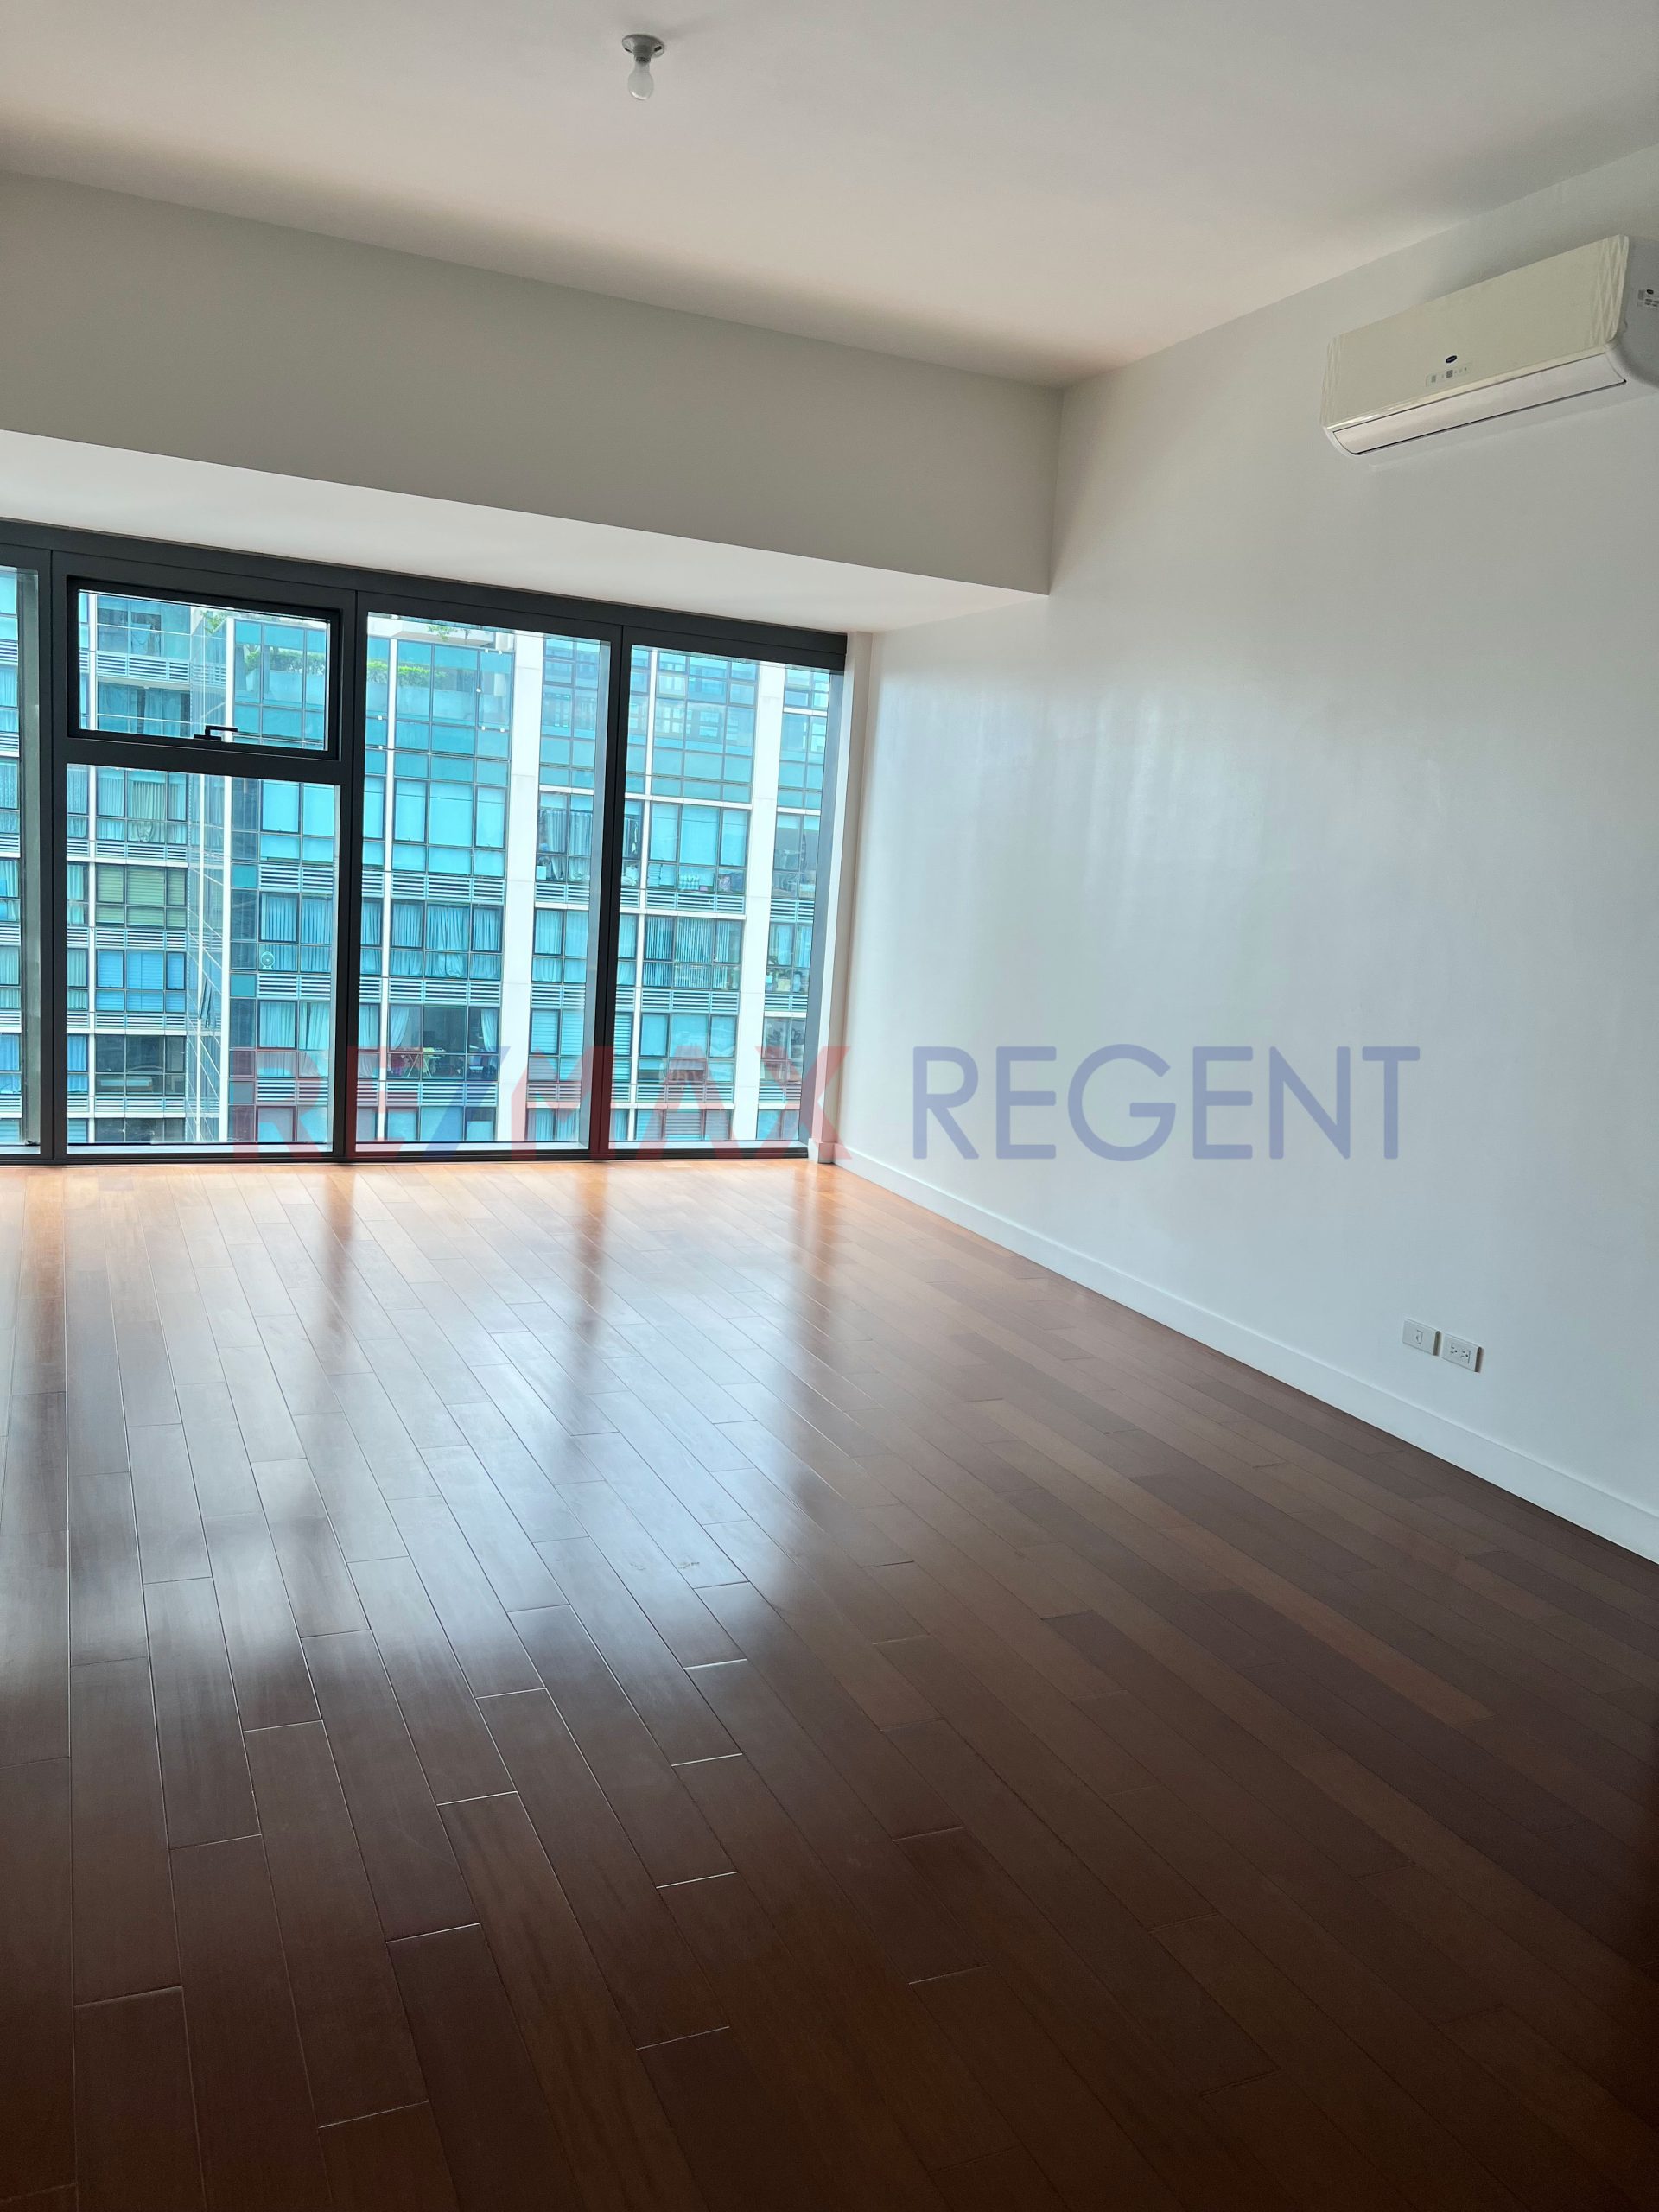 Condominium for Rent in  Grand Hyatt Residences, Bonifacio Global City